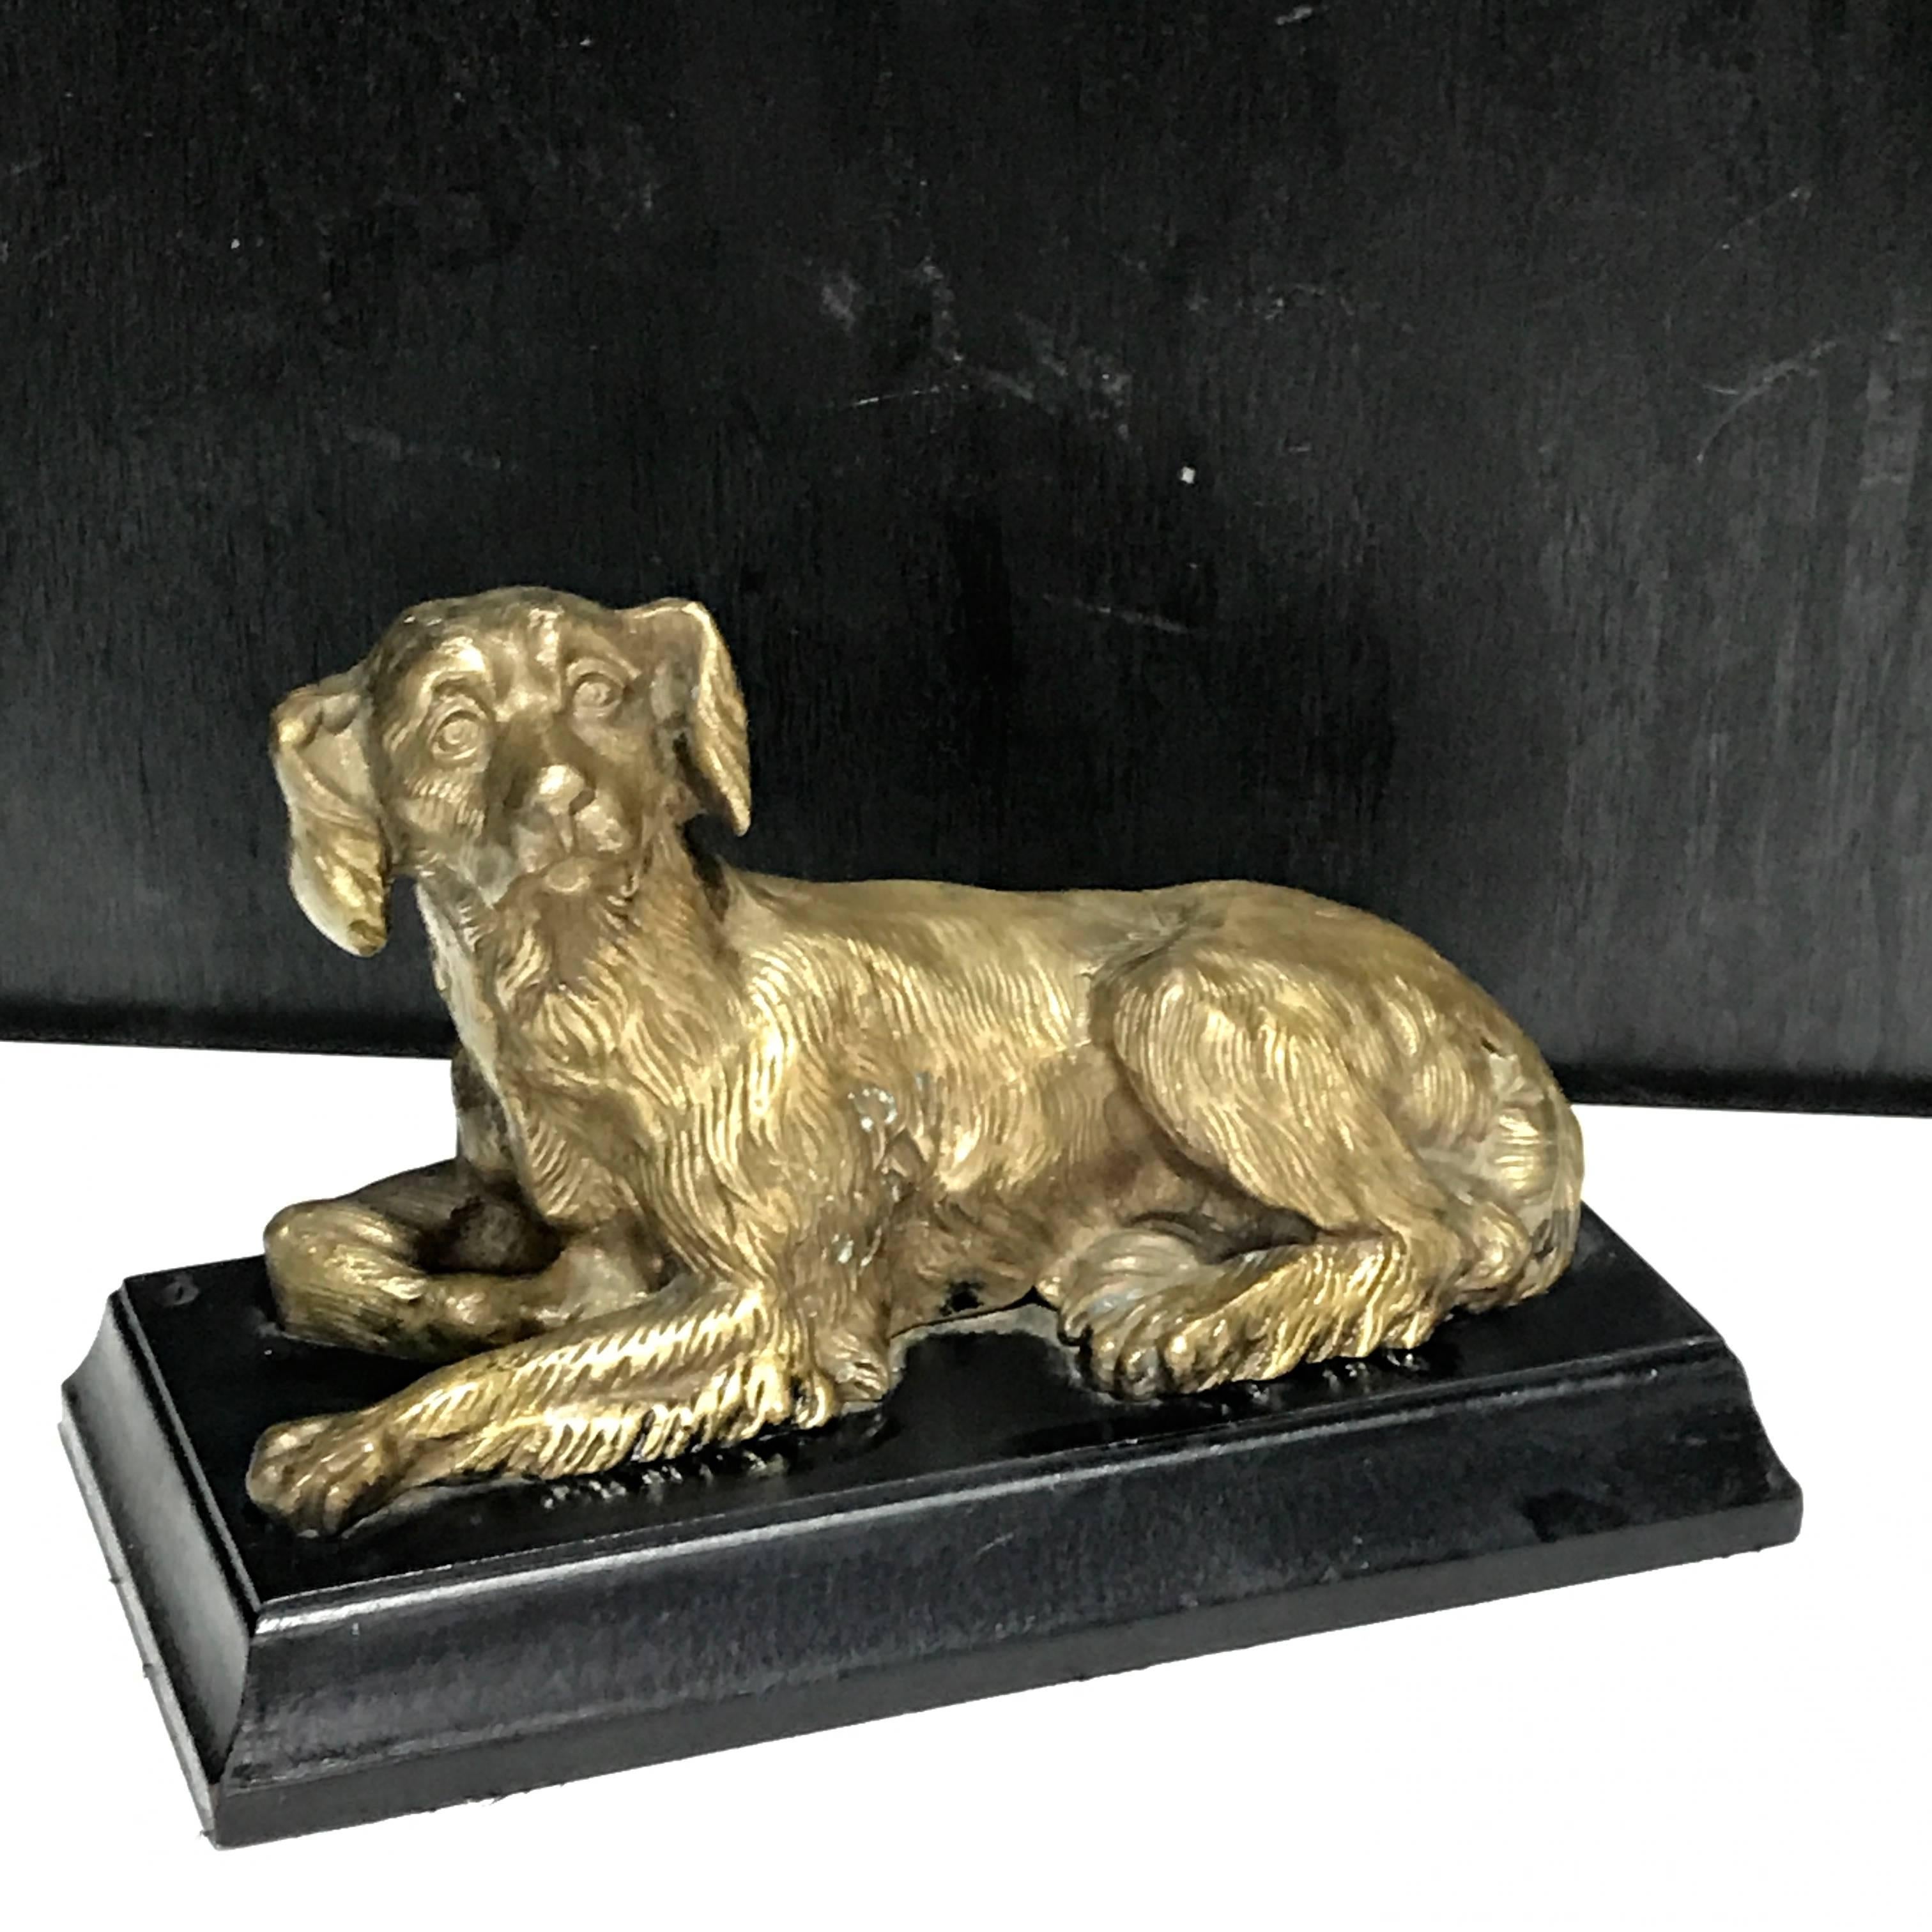 Regency style bronze figure of a recumbent dog.